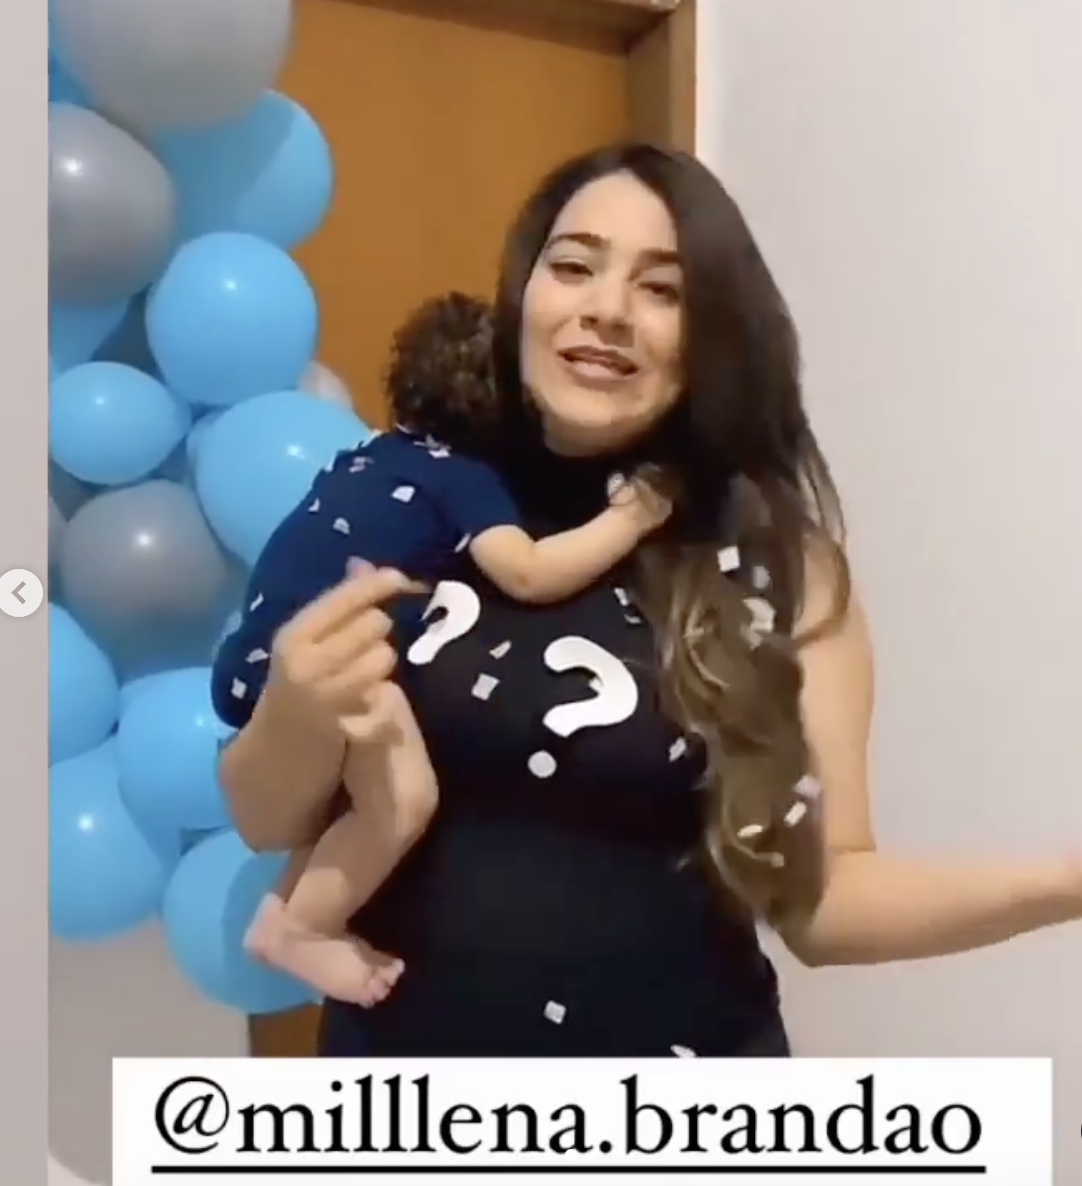 Millena Brandao bei der Vaterschaftsenthüllungsparty | Quelle: instagram.com/milllena.brandao/